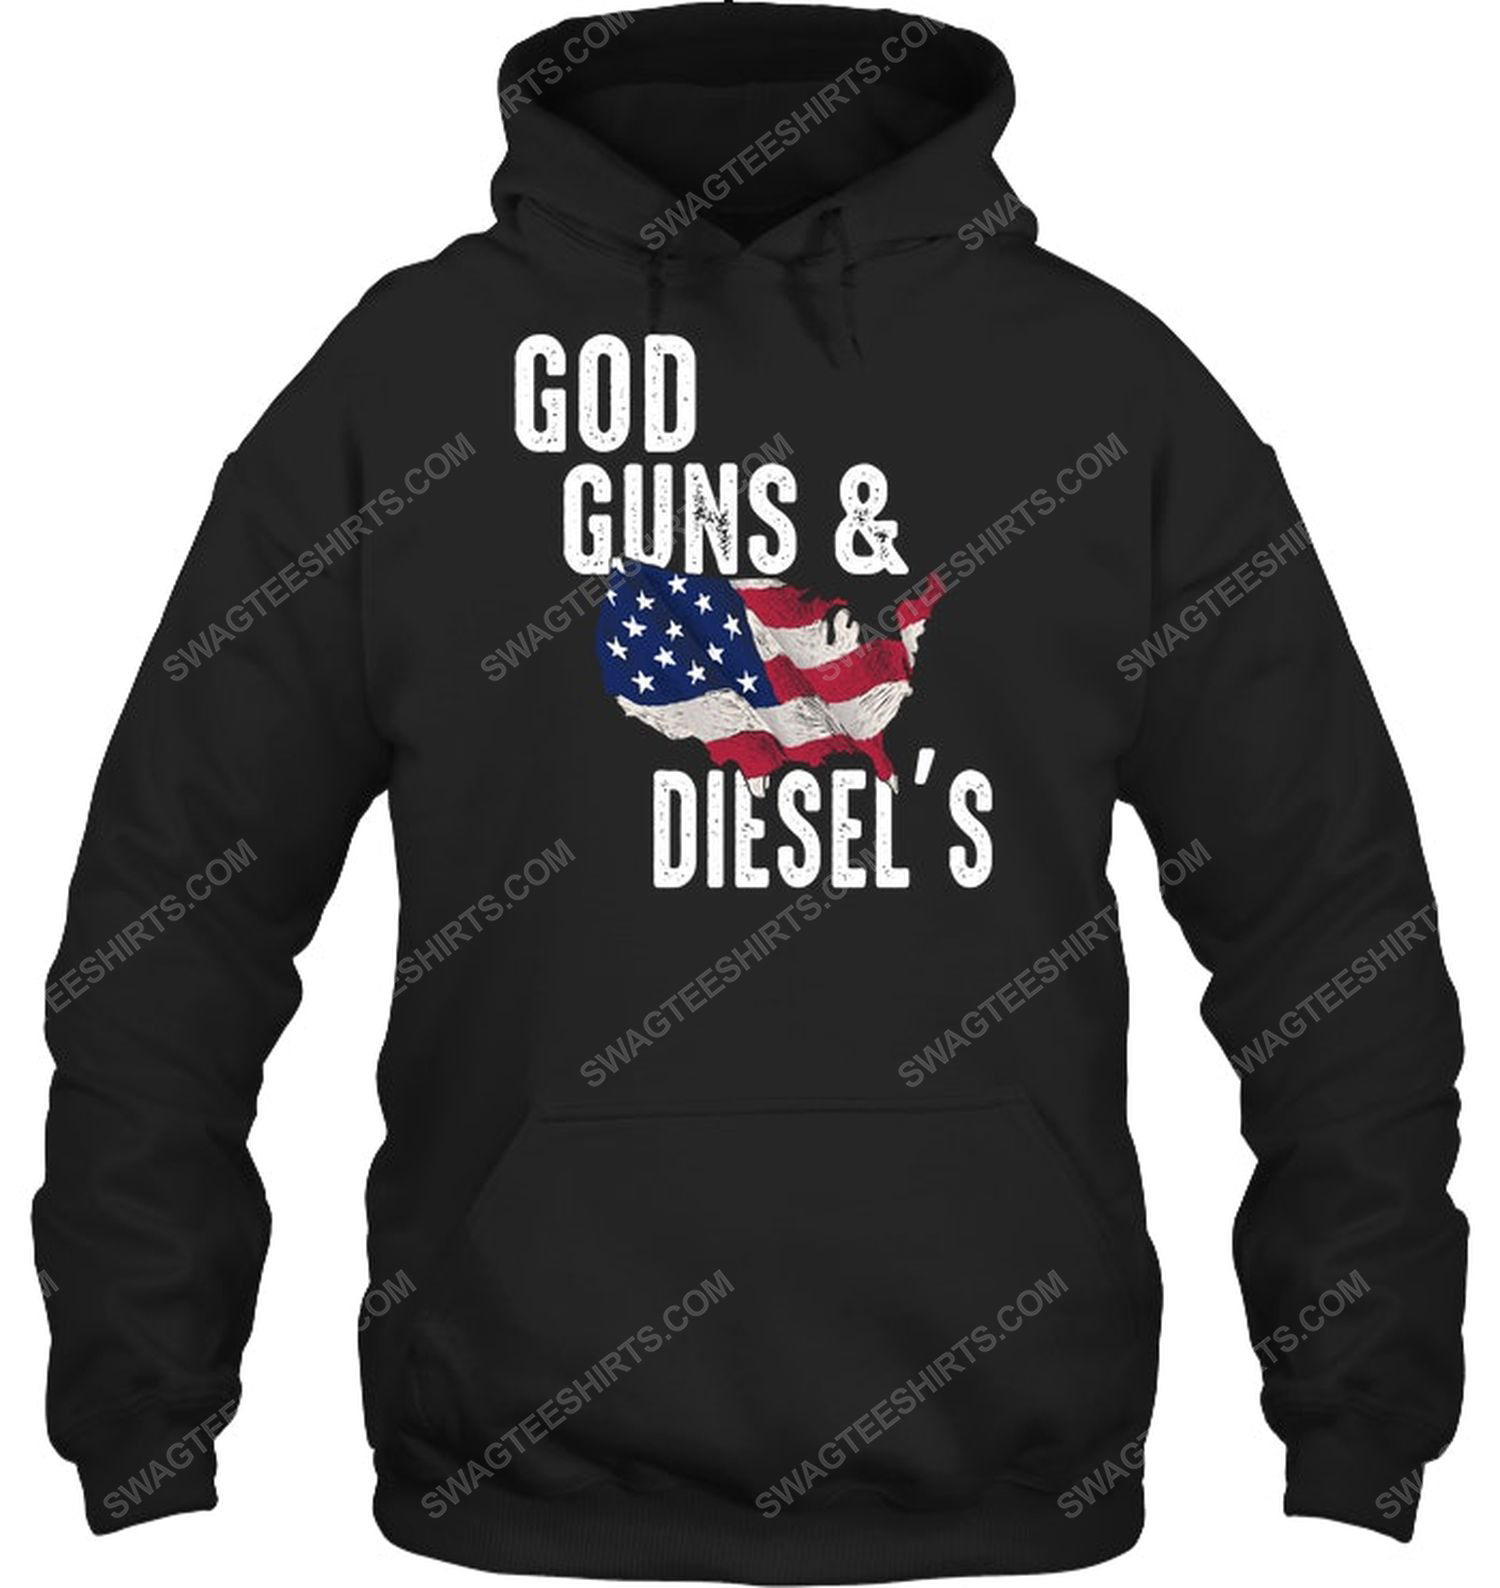 God guns and diesel's american flag political hoodie